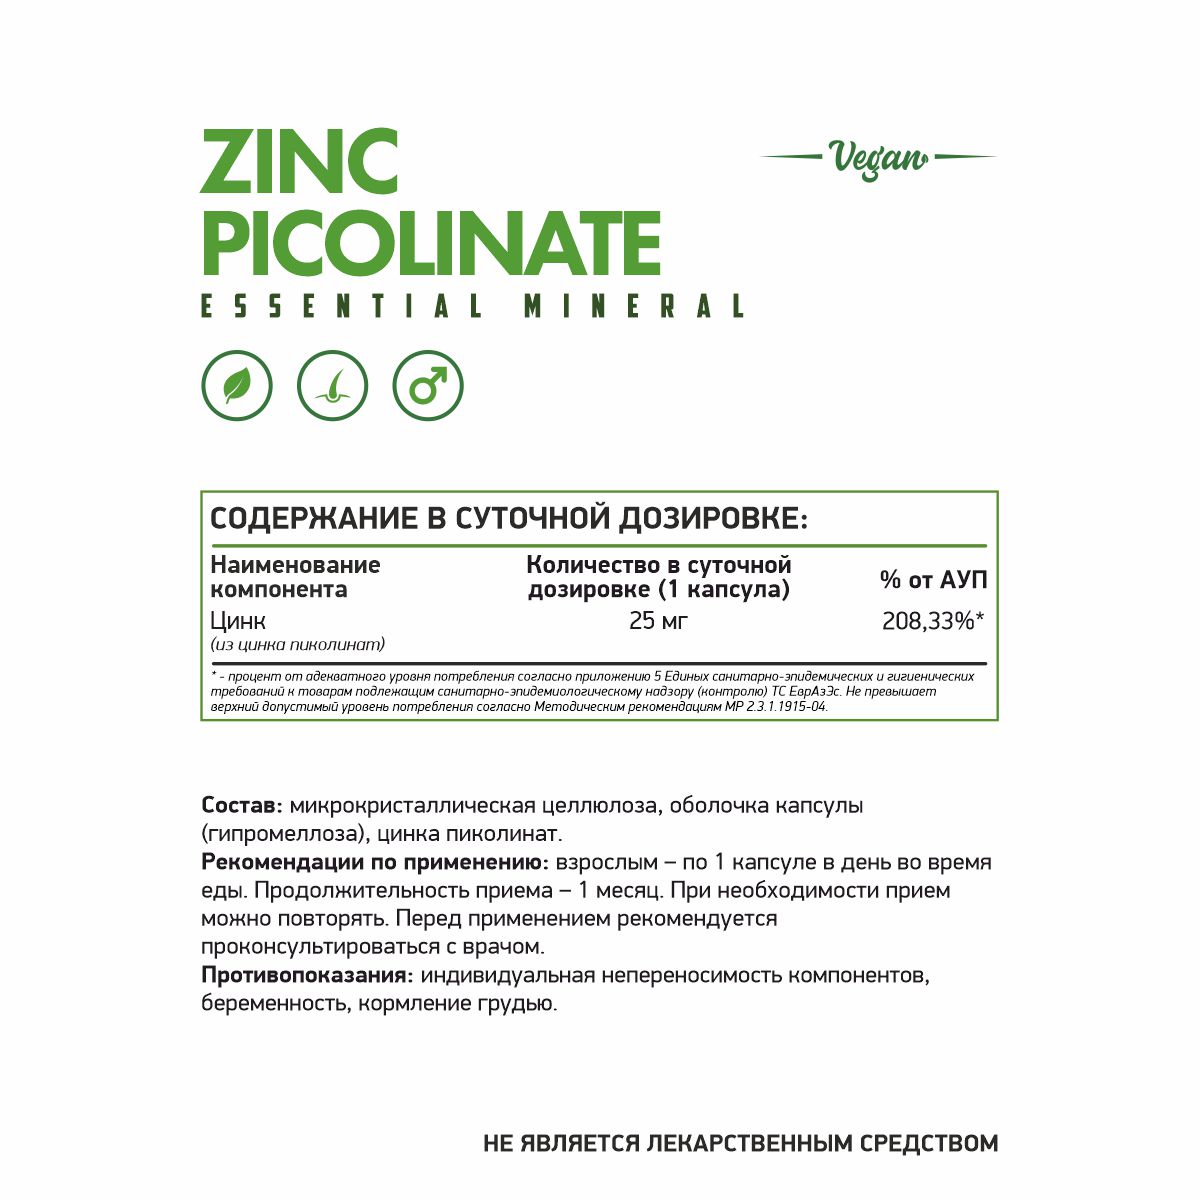 NaturalSupp Цинк Пиколинат 25 мг, 60 вегетарианских капсул